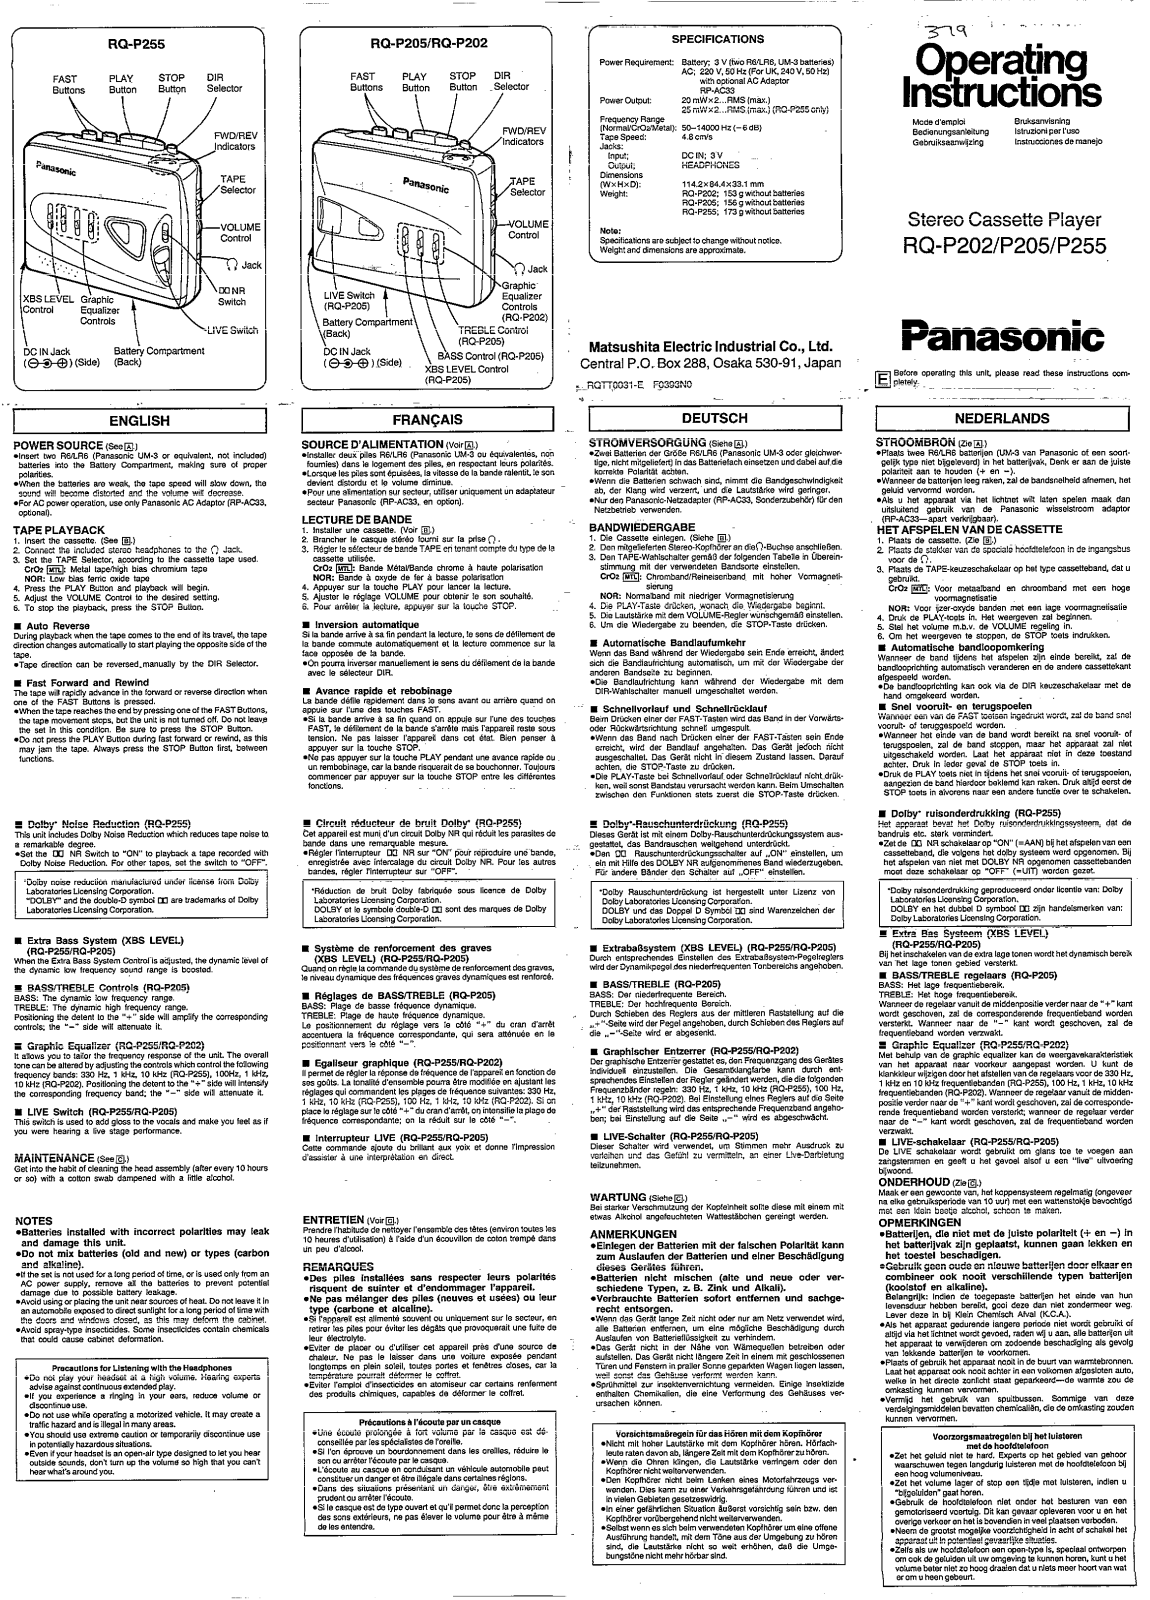 Panasonic RQ-P255, RQ-P205, RQ-P202 User Manual